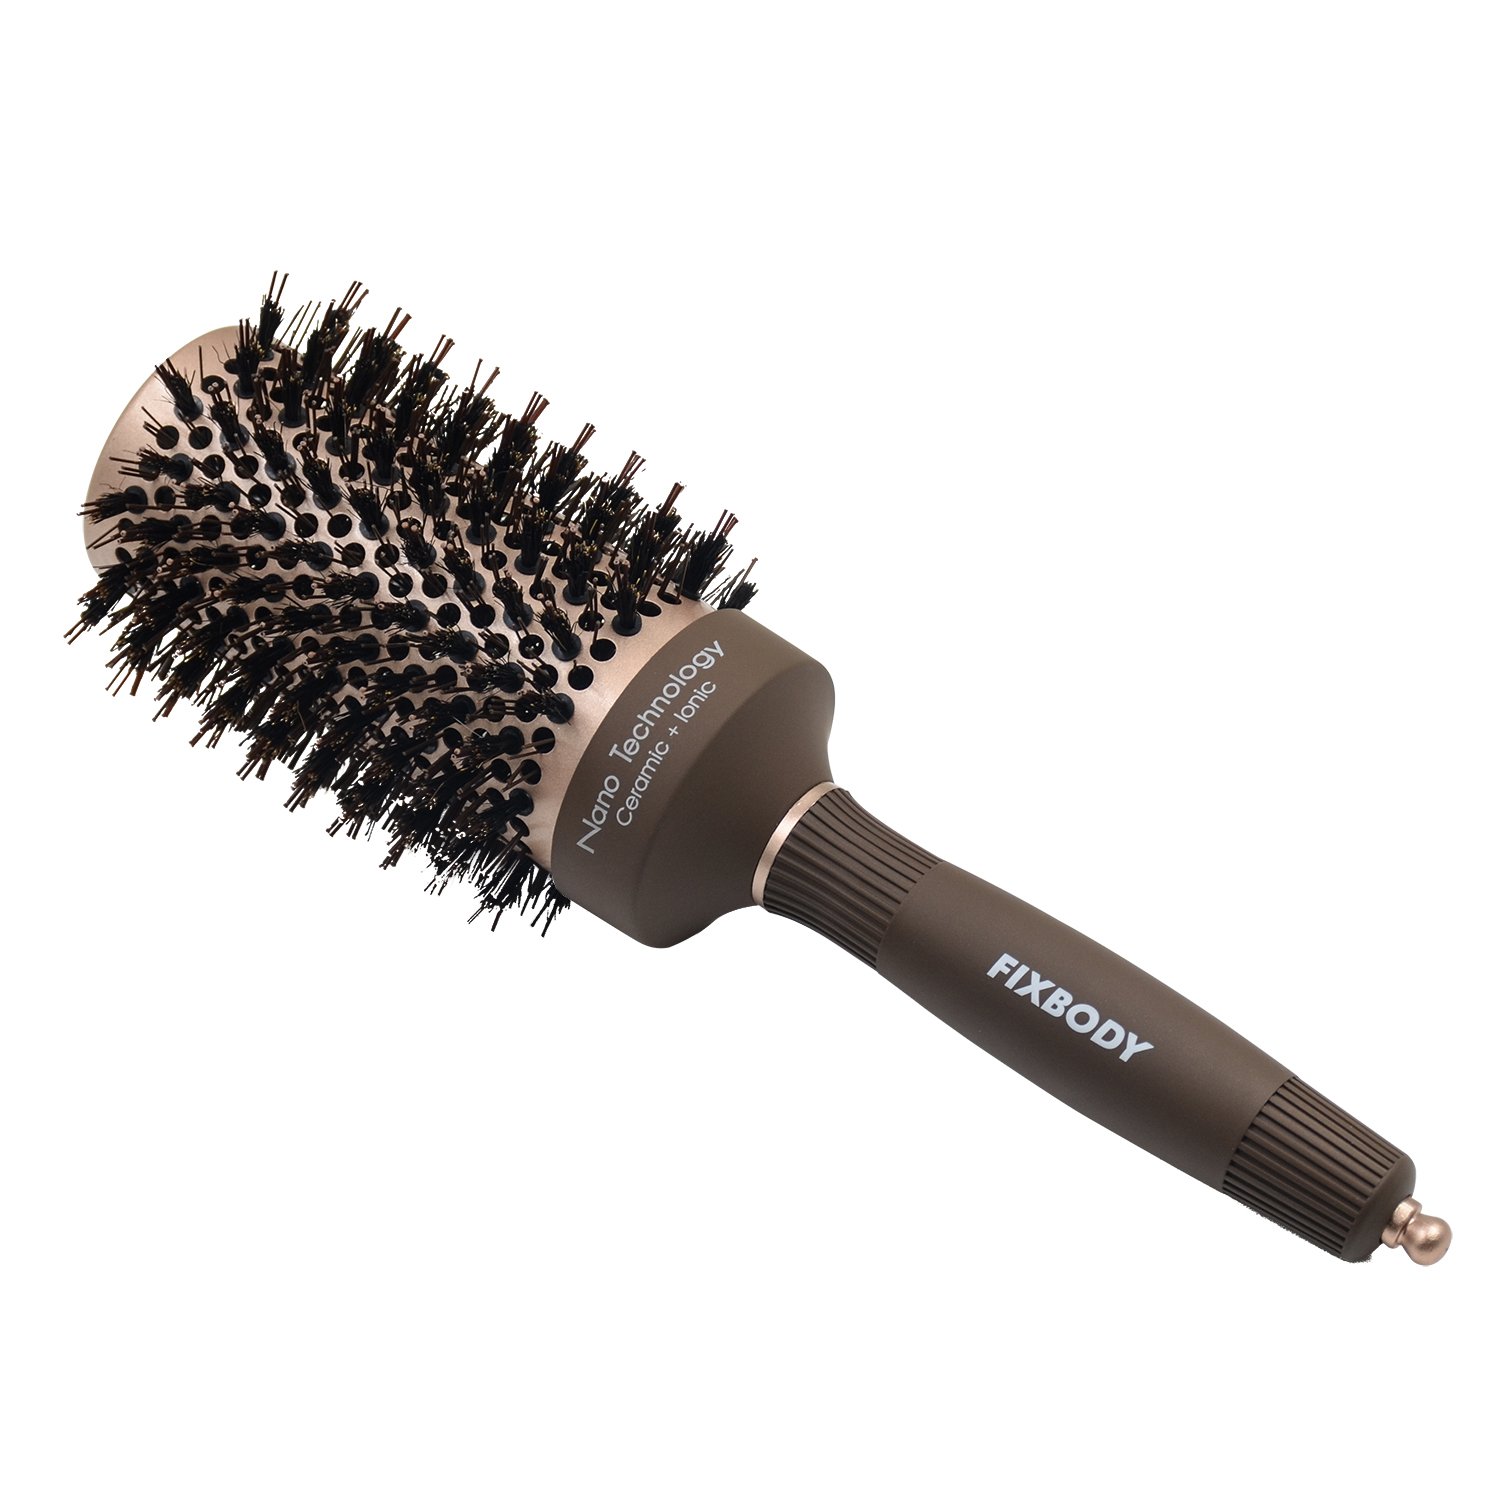 FIXBODY Boar Bristles Round Hair Brush, Nano Thermal [...]